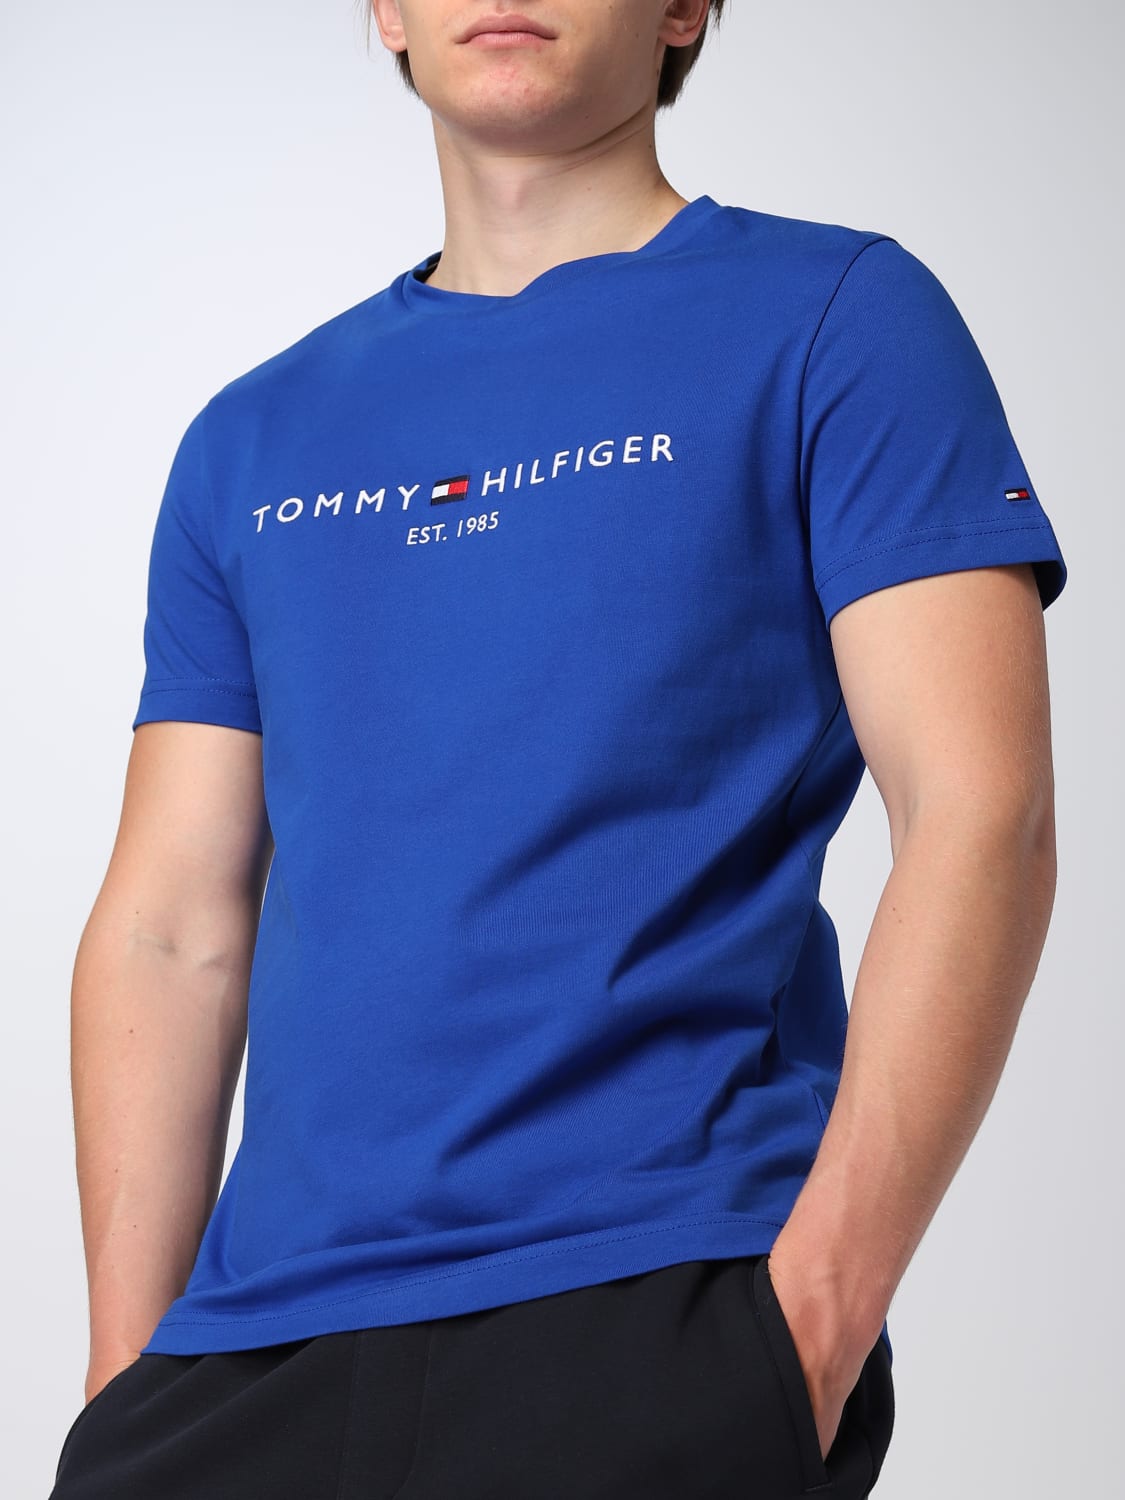 Tommy Hilfiger Logo T Shirt Blue - Male - Medium